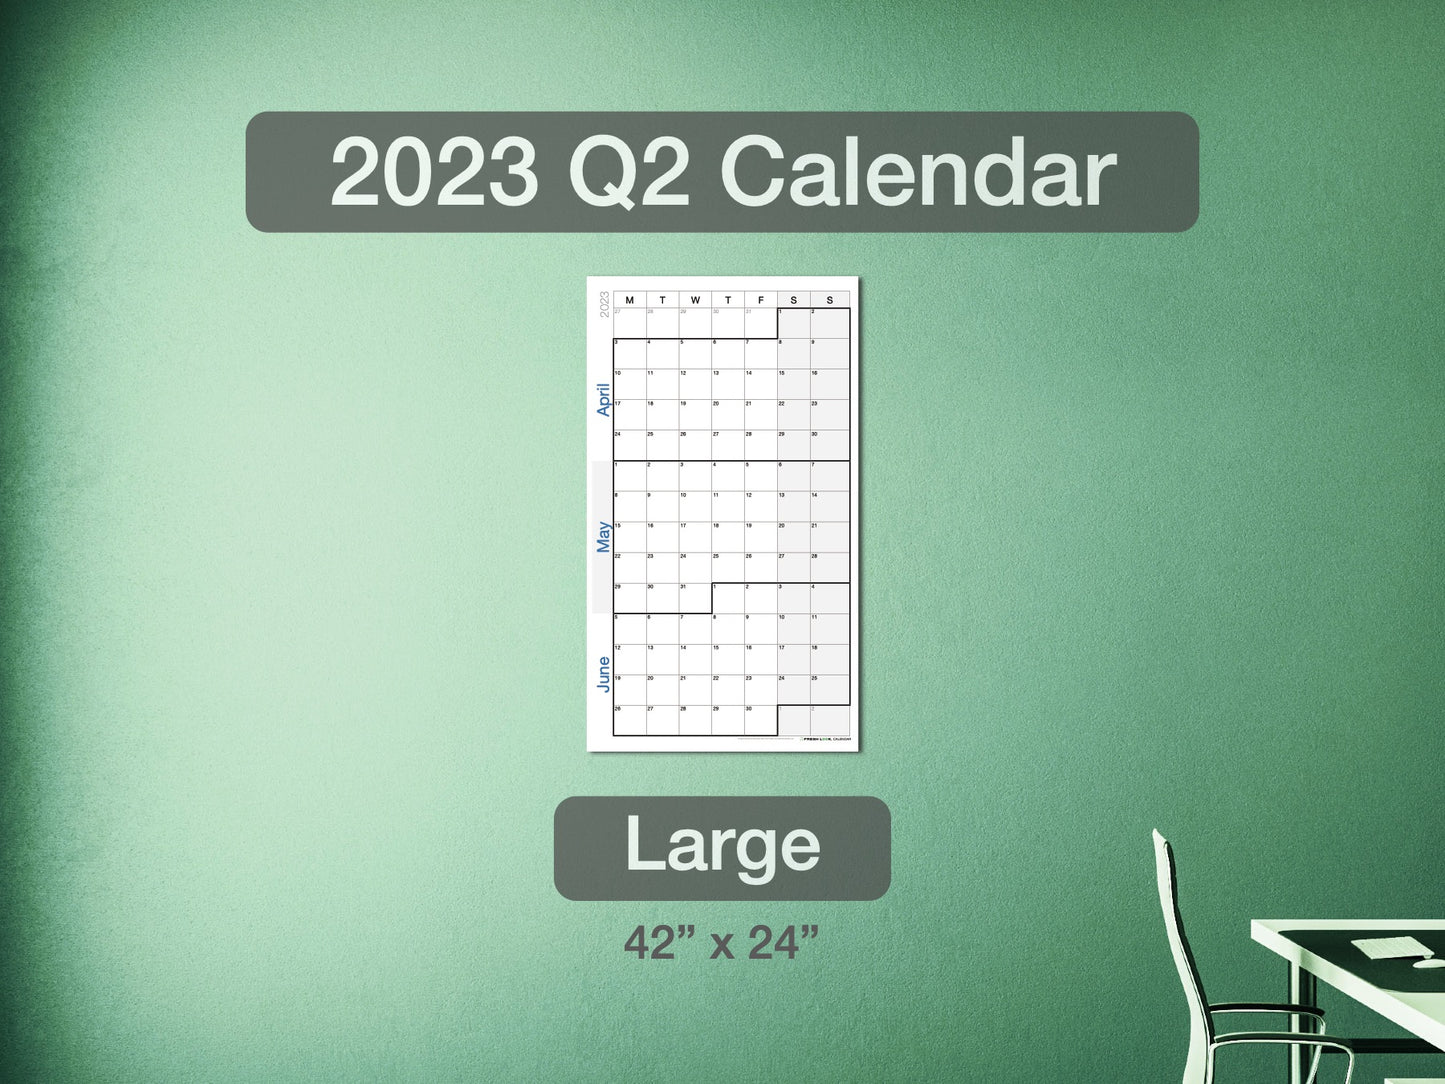 2023 Q2 Calendar Large